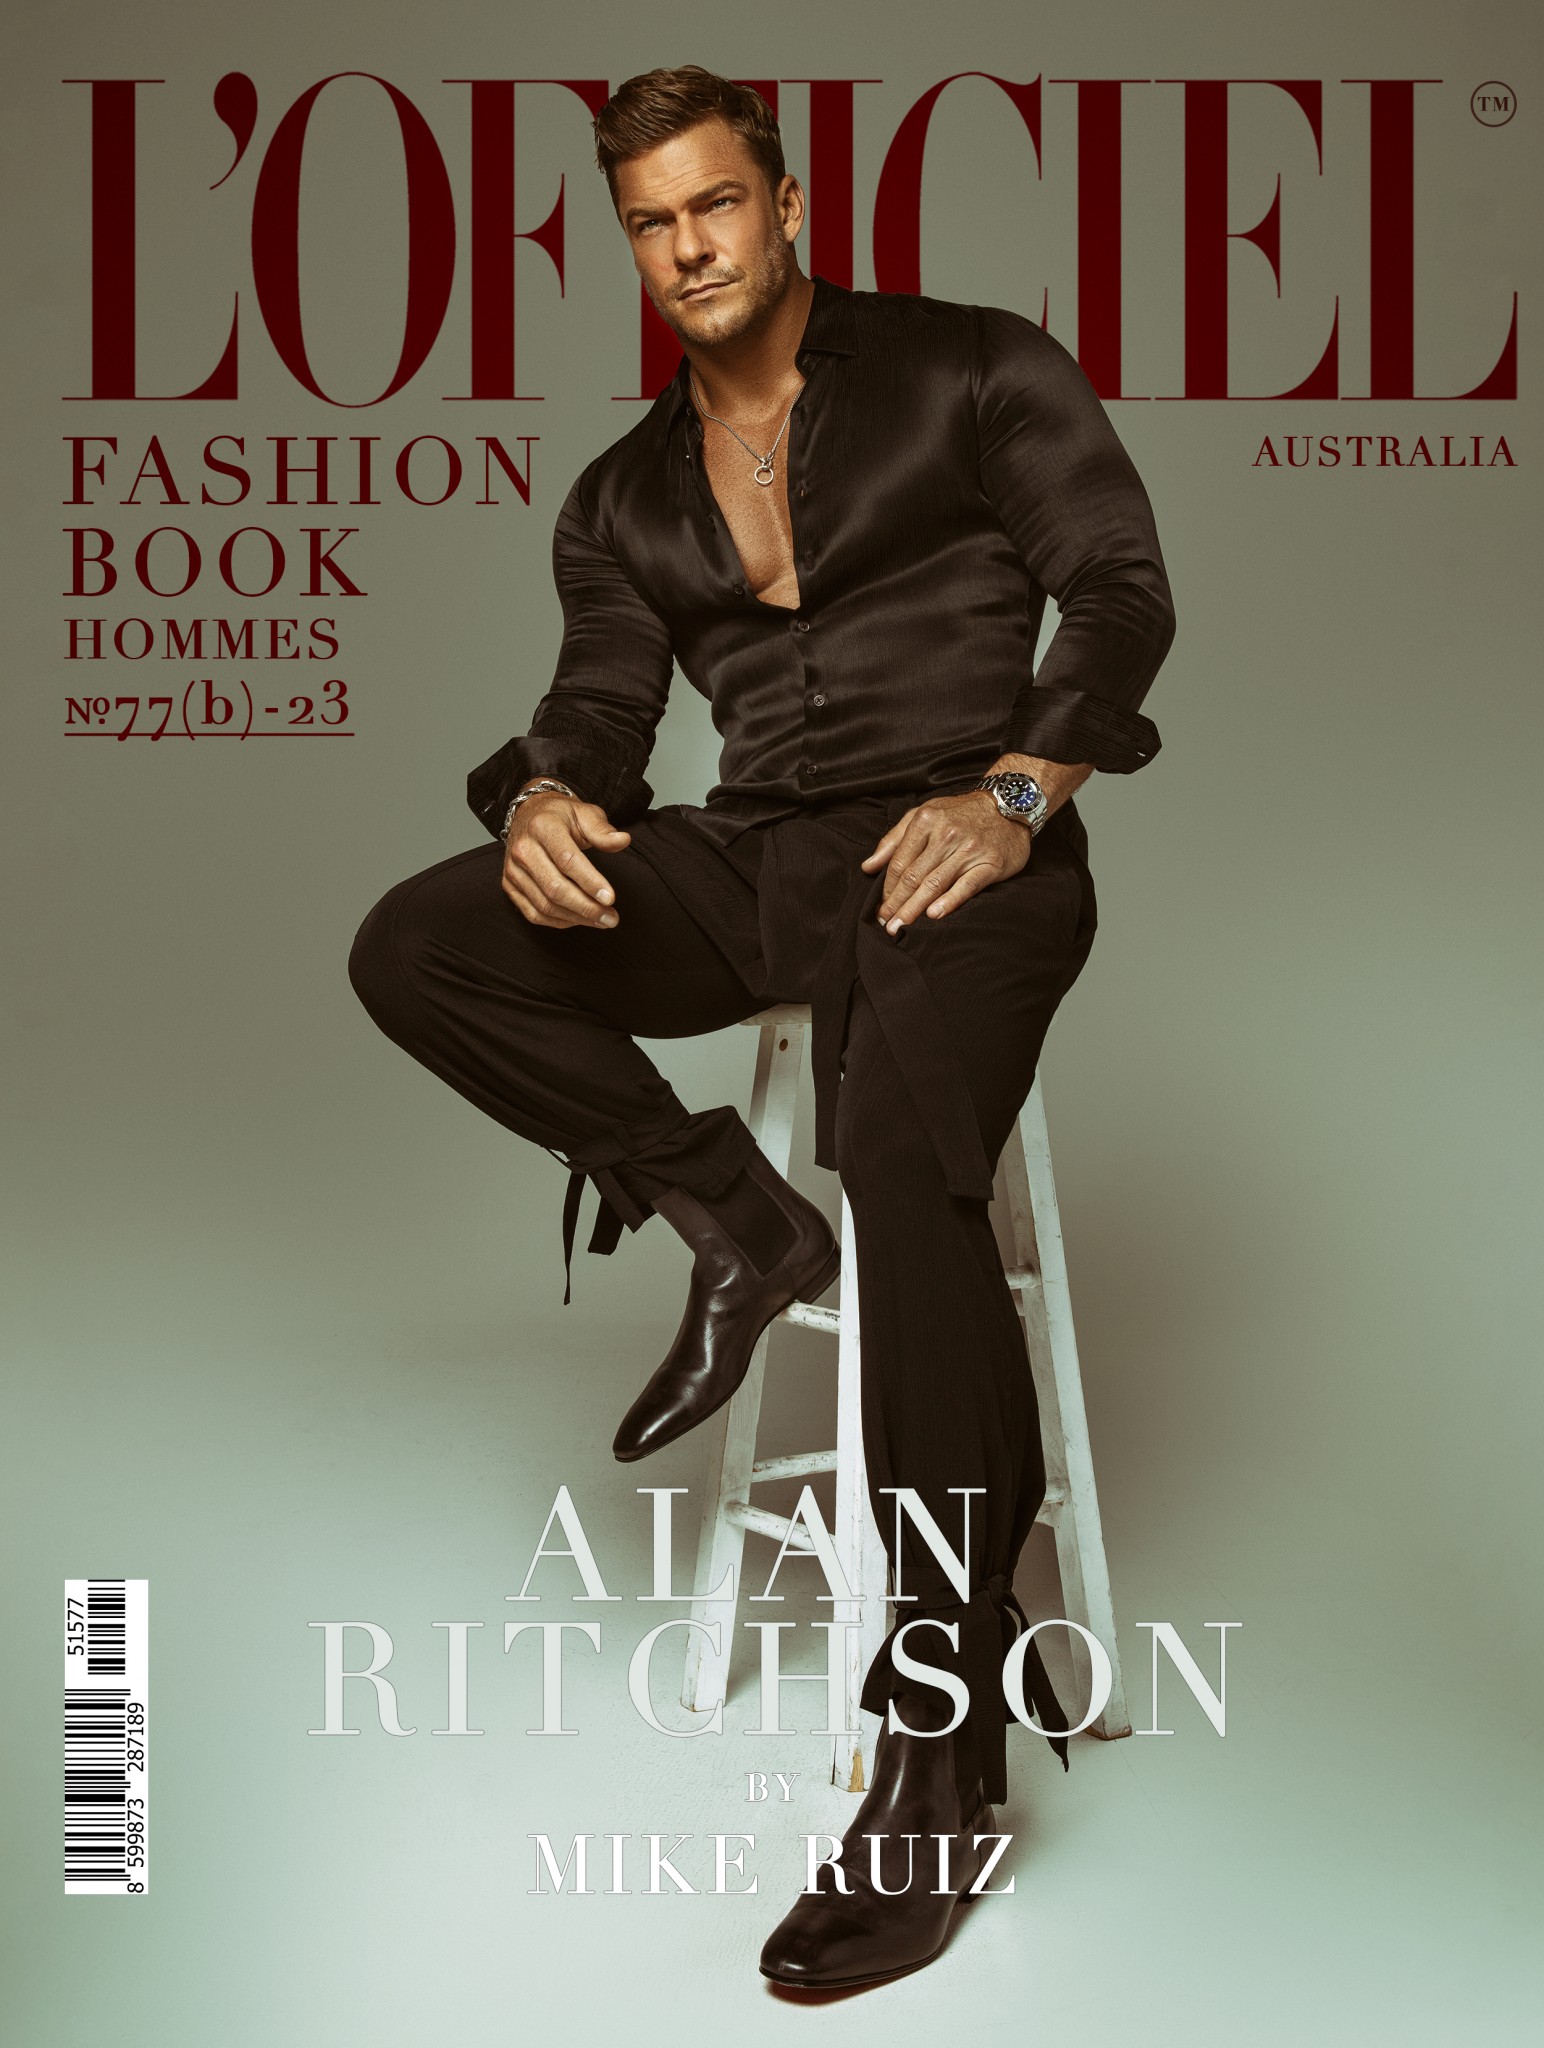 Alan Ritchson – Fashion Book – L'Officiel Australia #LOfficielFashionBook